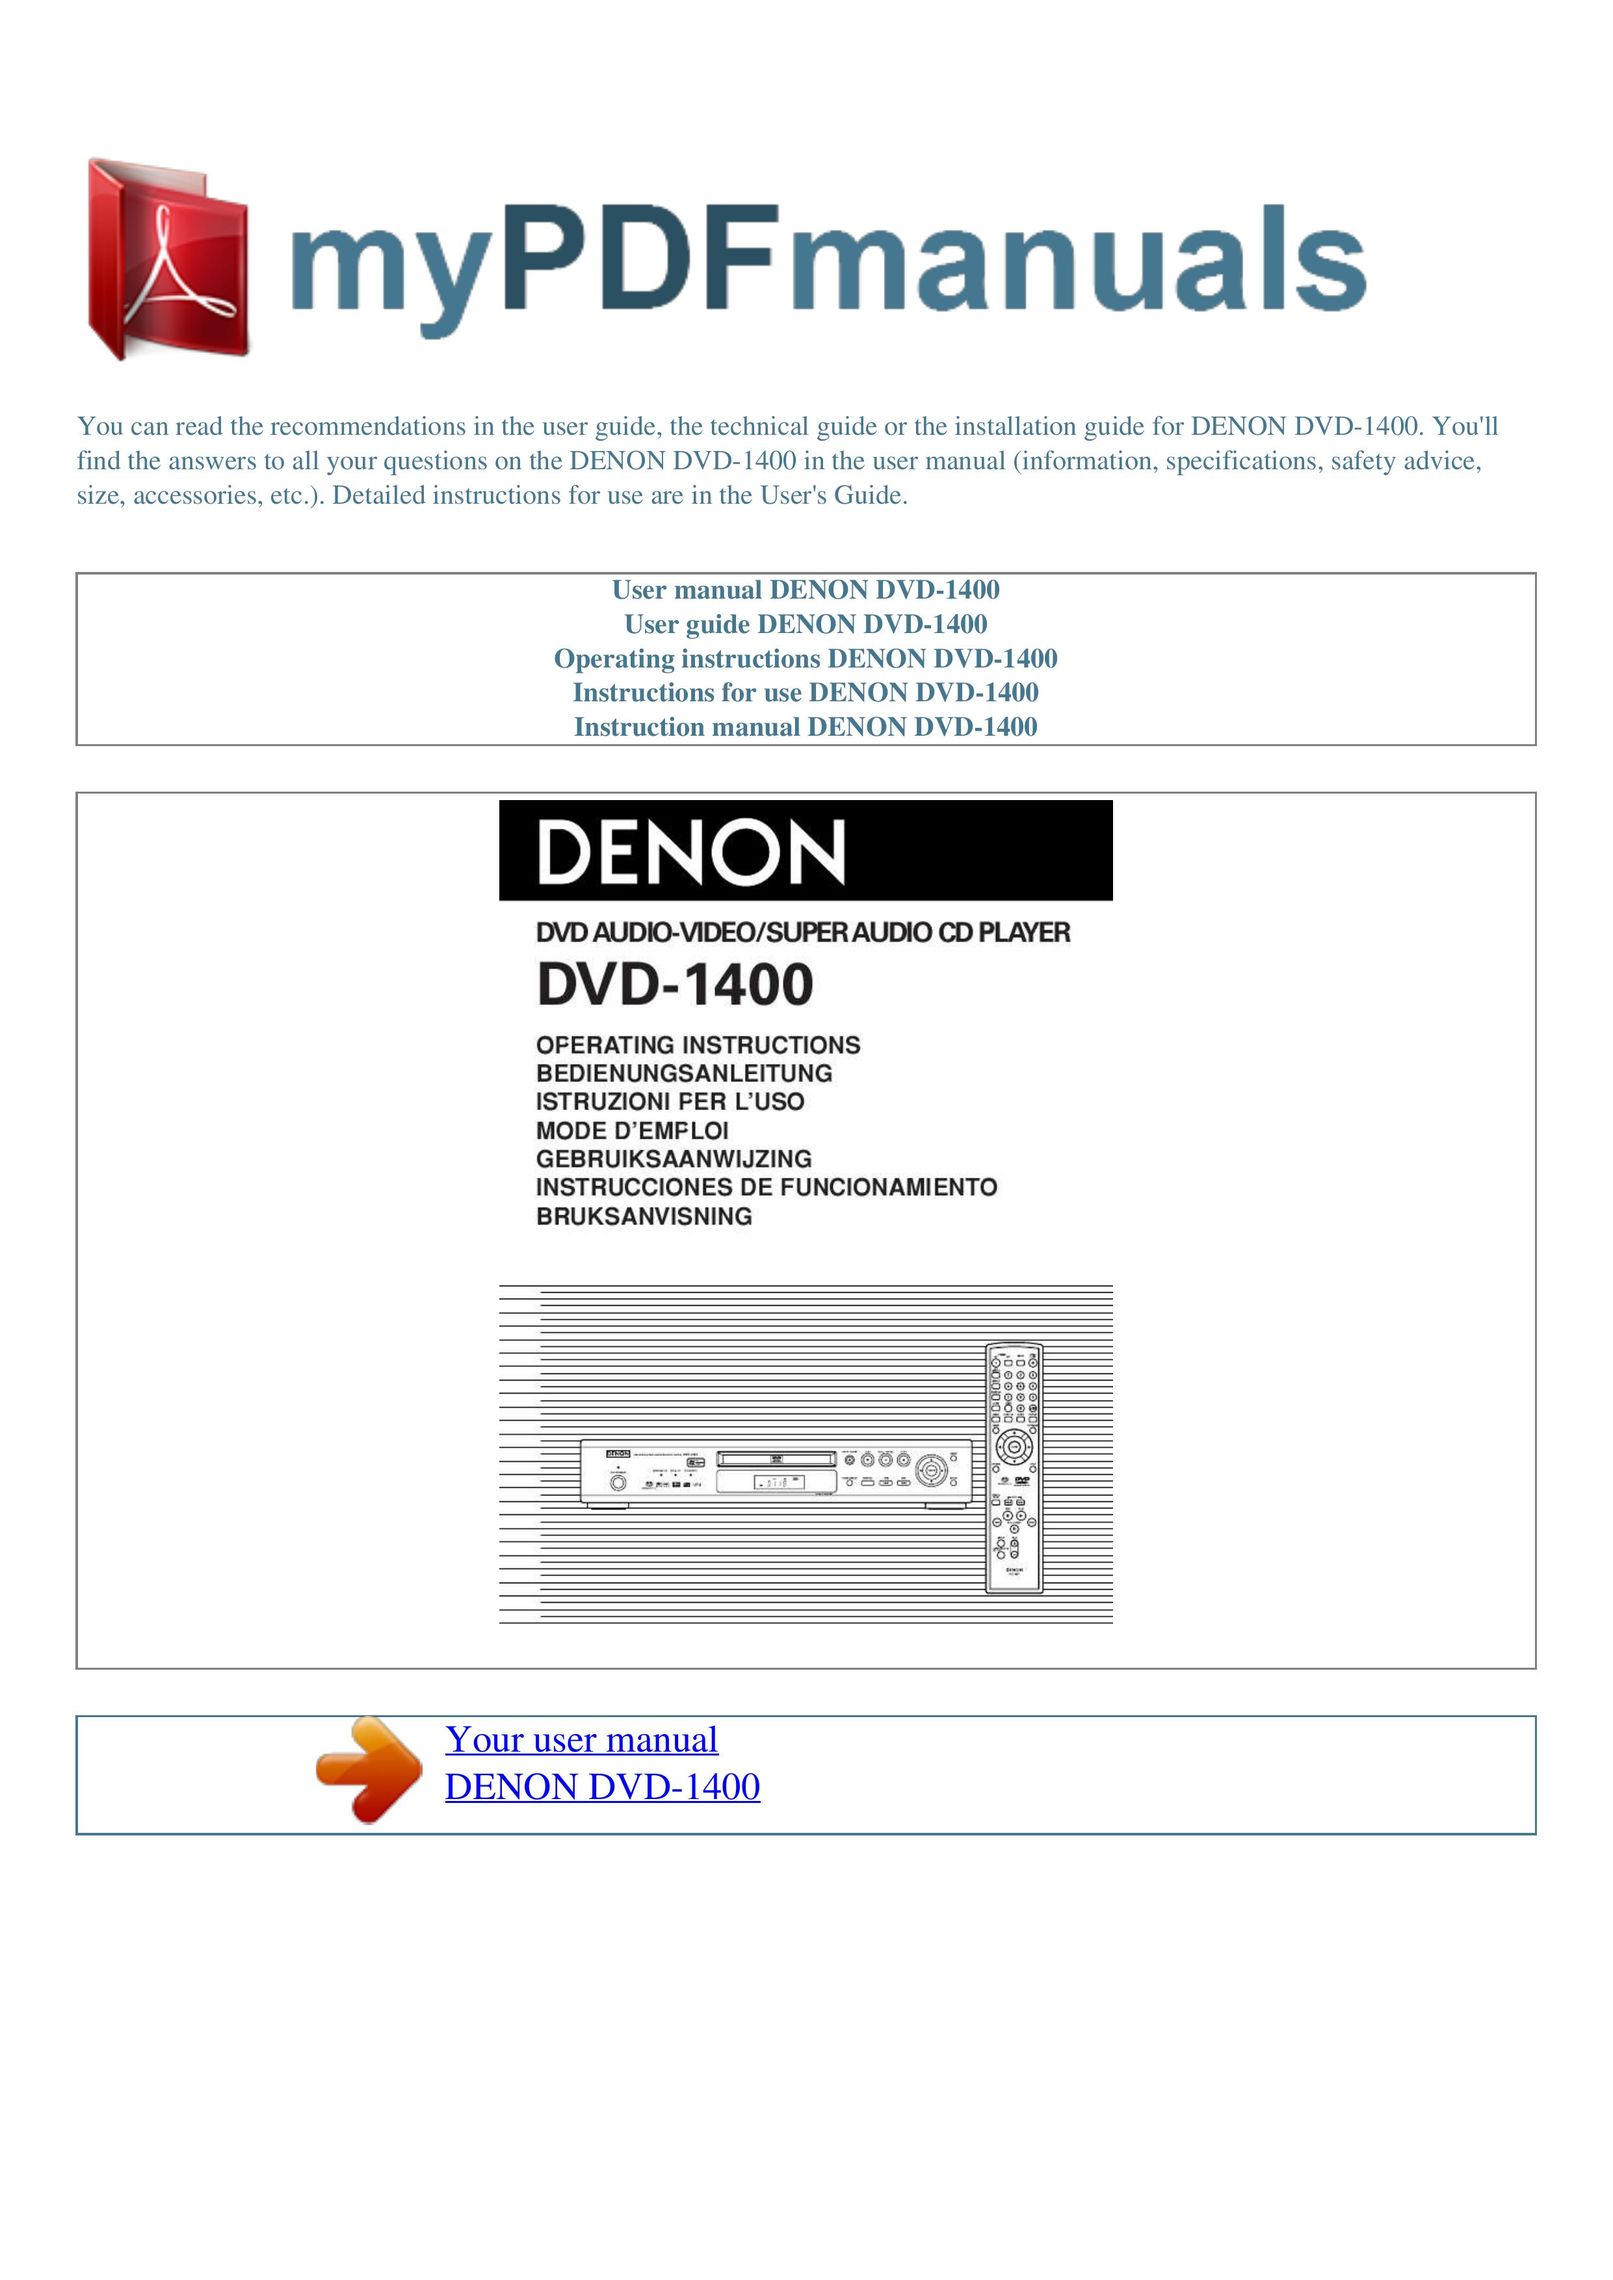 Denon DVD-1400 DVD Player User Manual